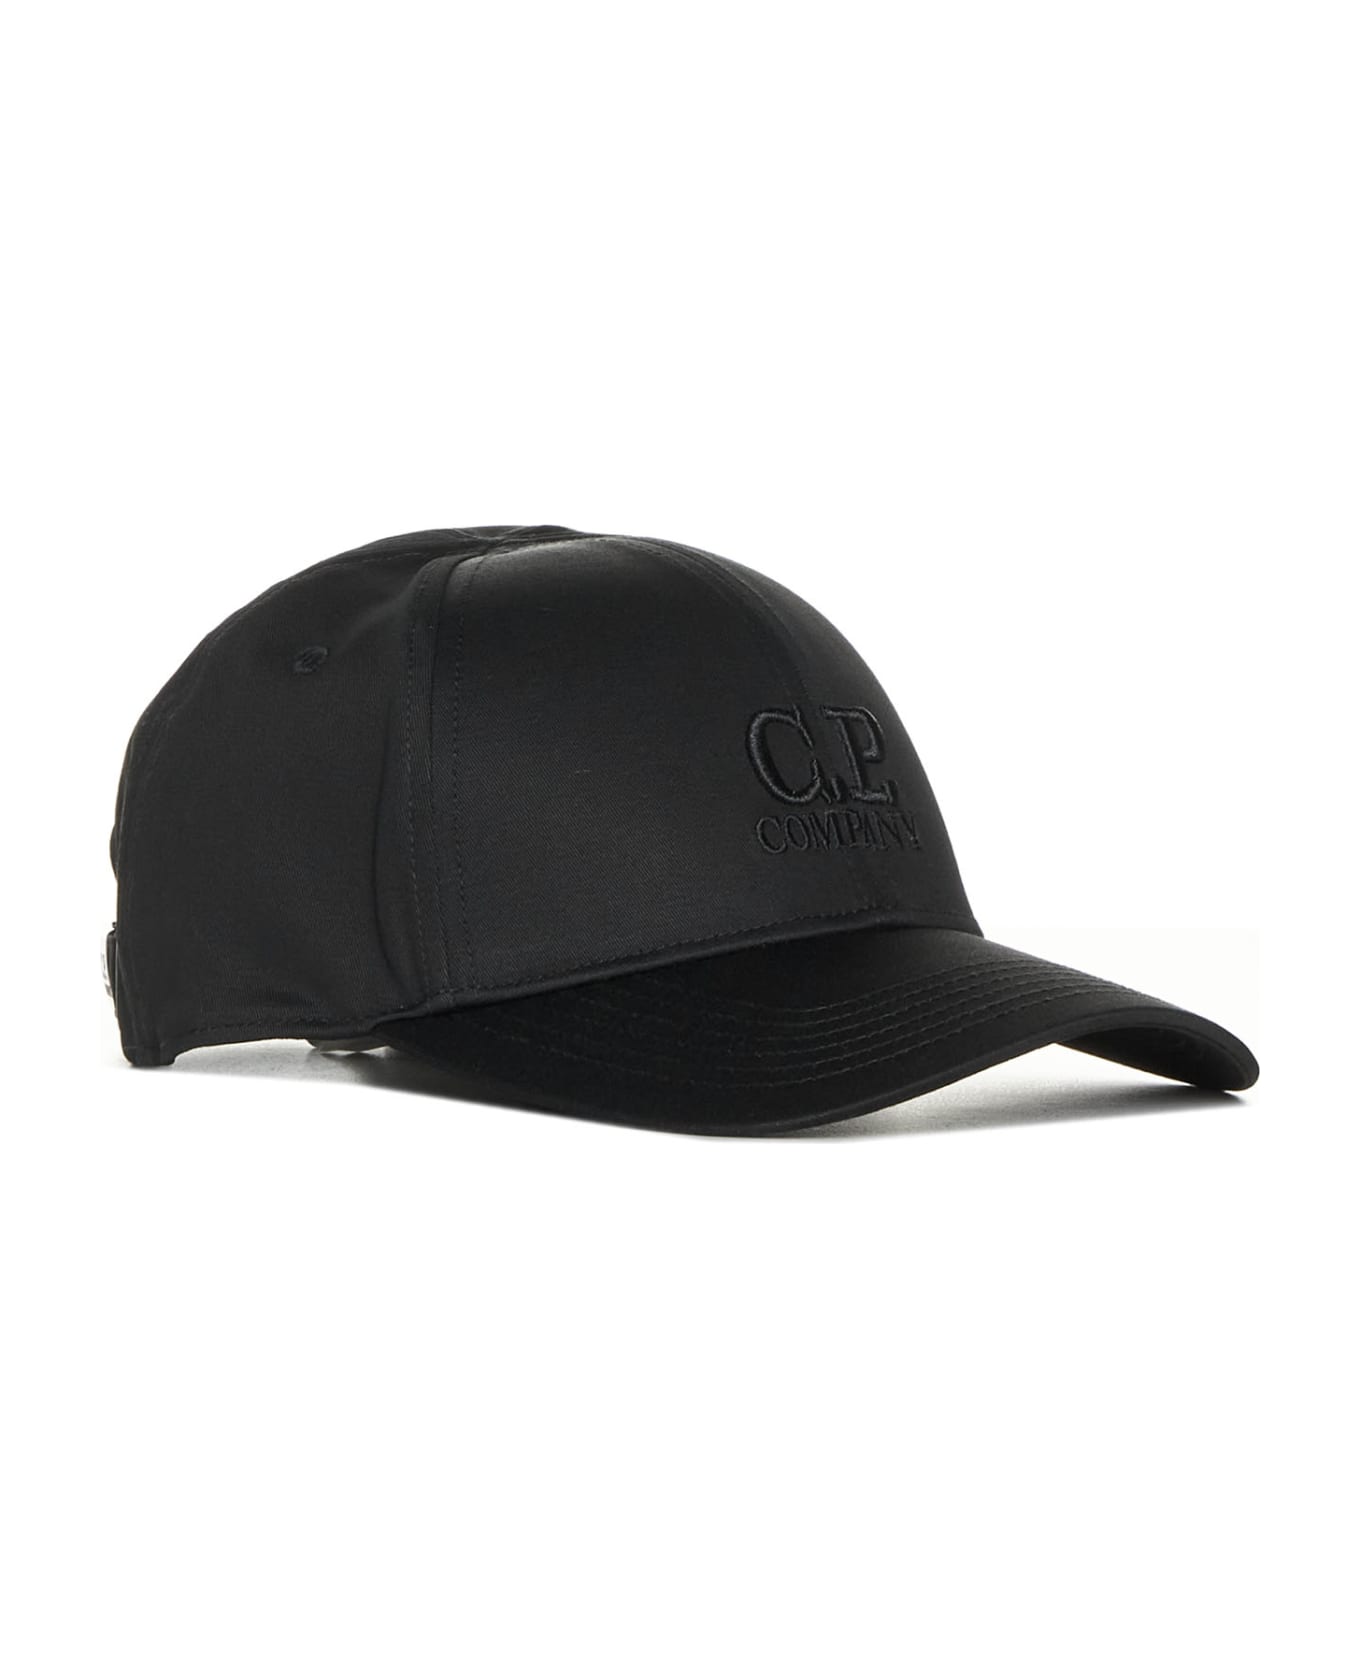 C.P. Company Hat - Black 帽子